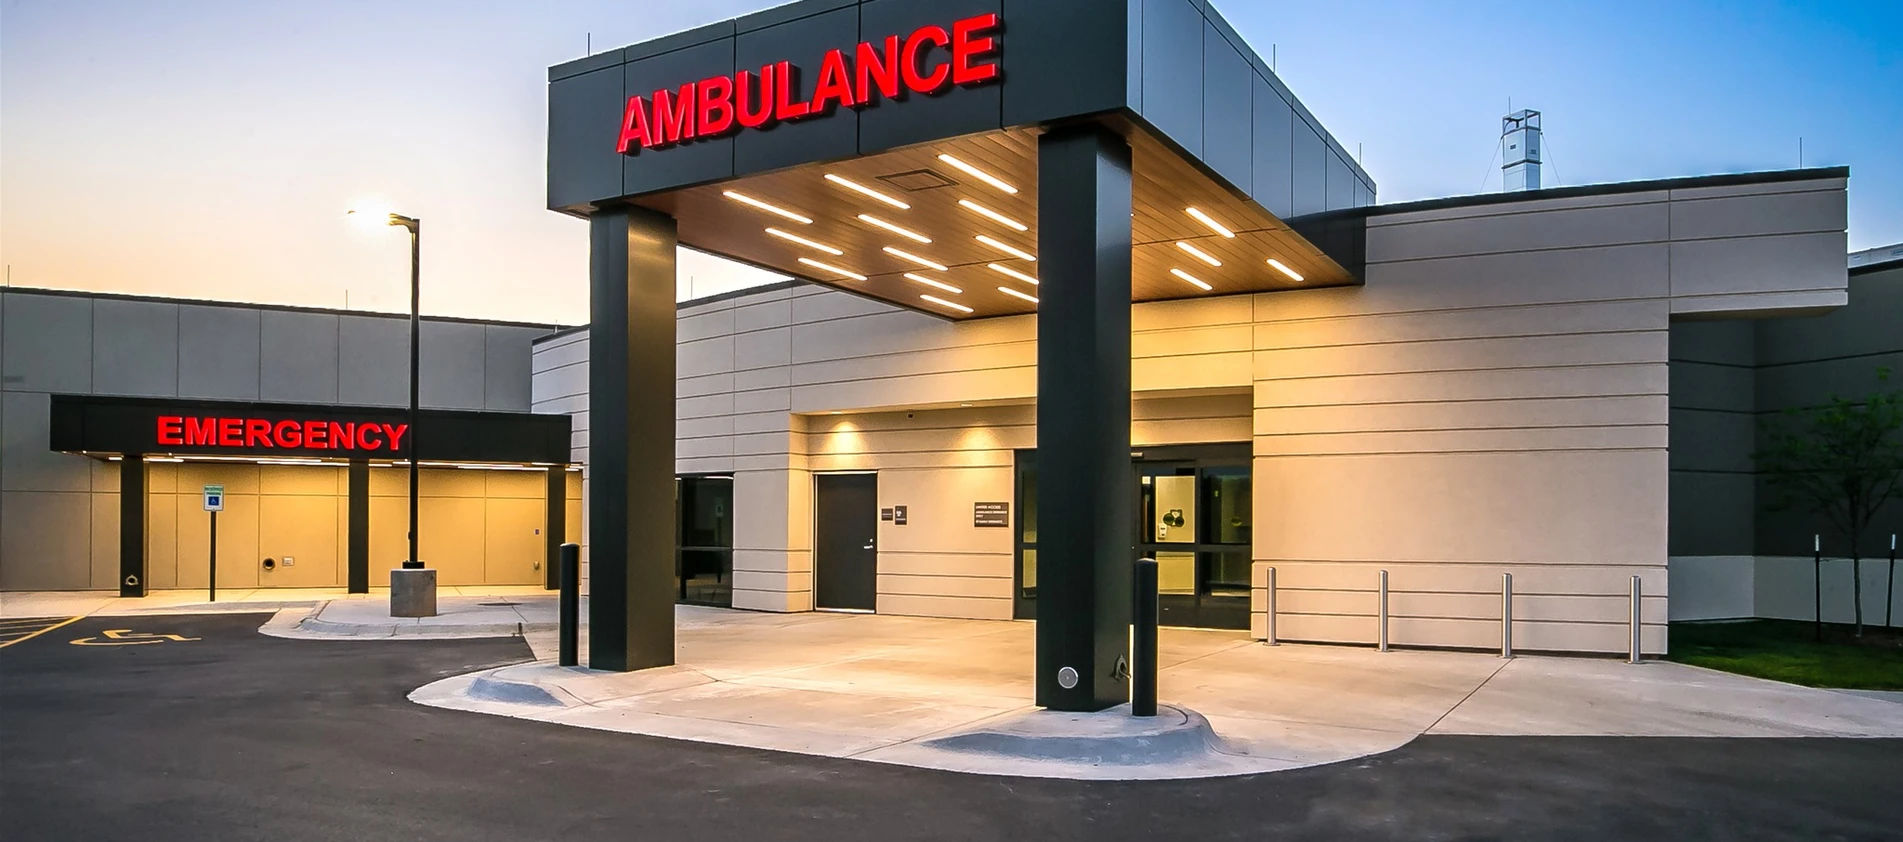 Caldwell Regional Medical Center Emergency Department  Ambulance Entrance side